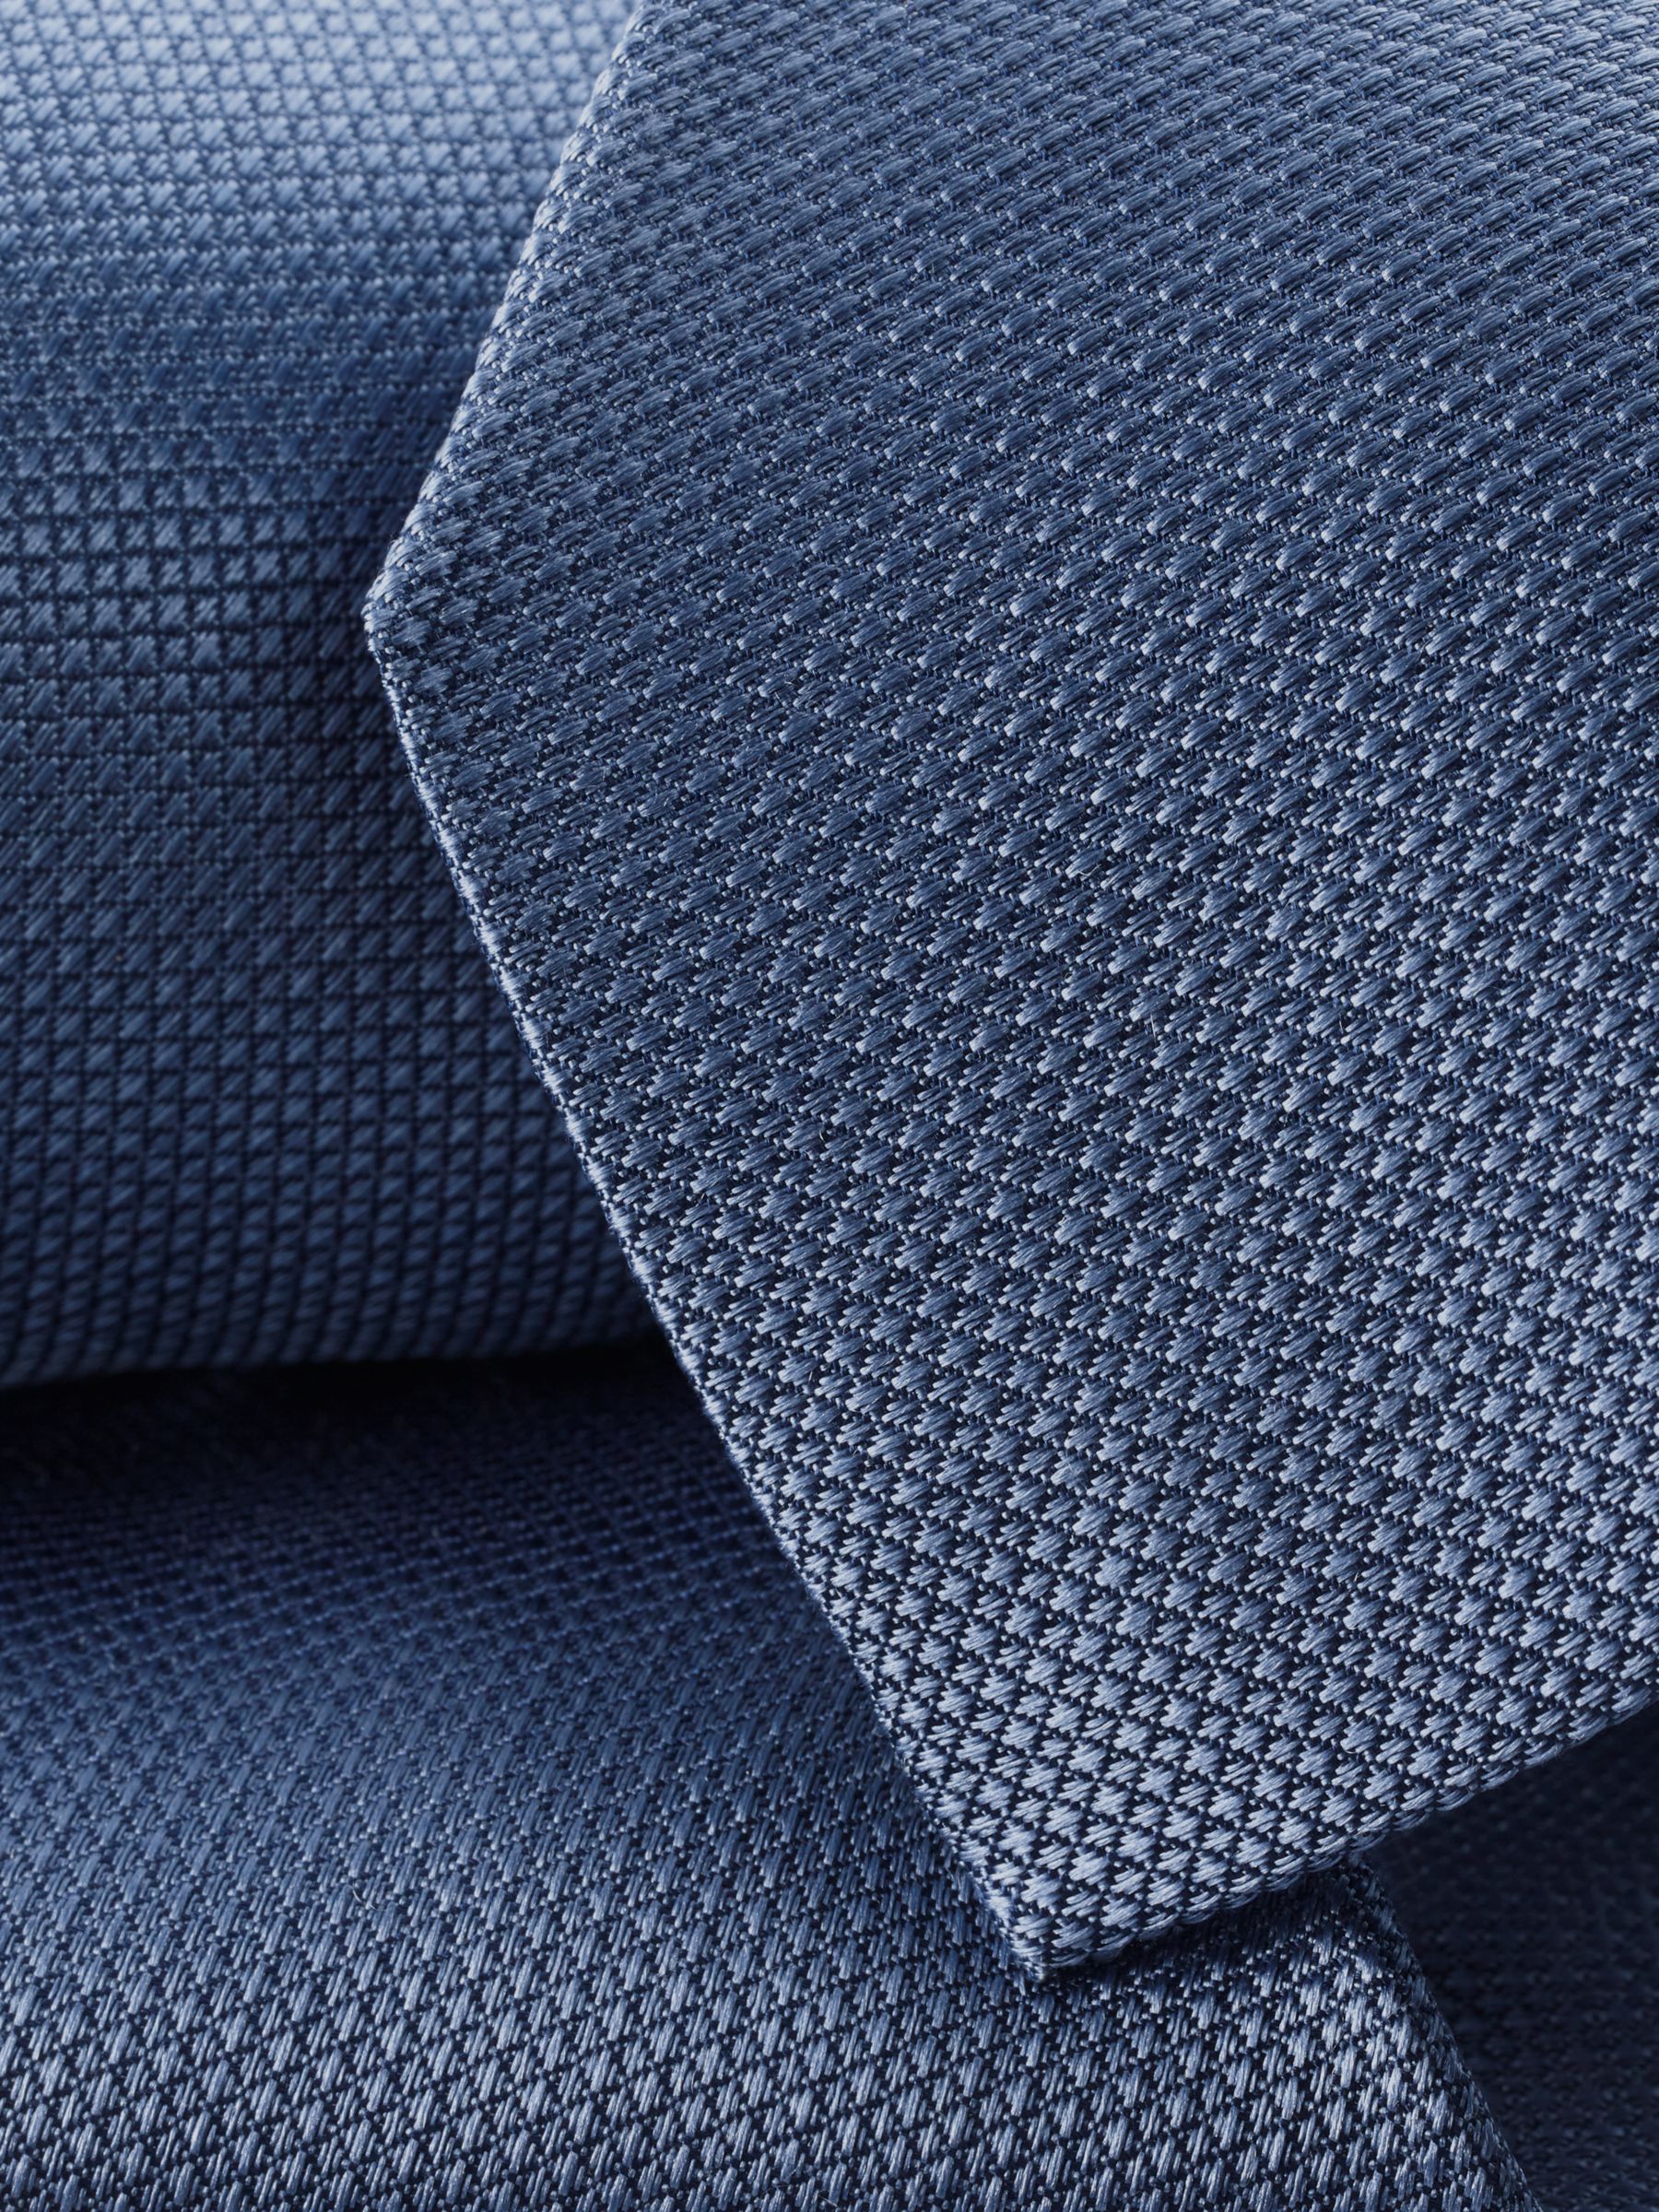 Charles Tyrwhitt Stain Resistant Silk Tie, Steel Blue, One Size